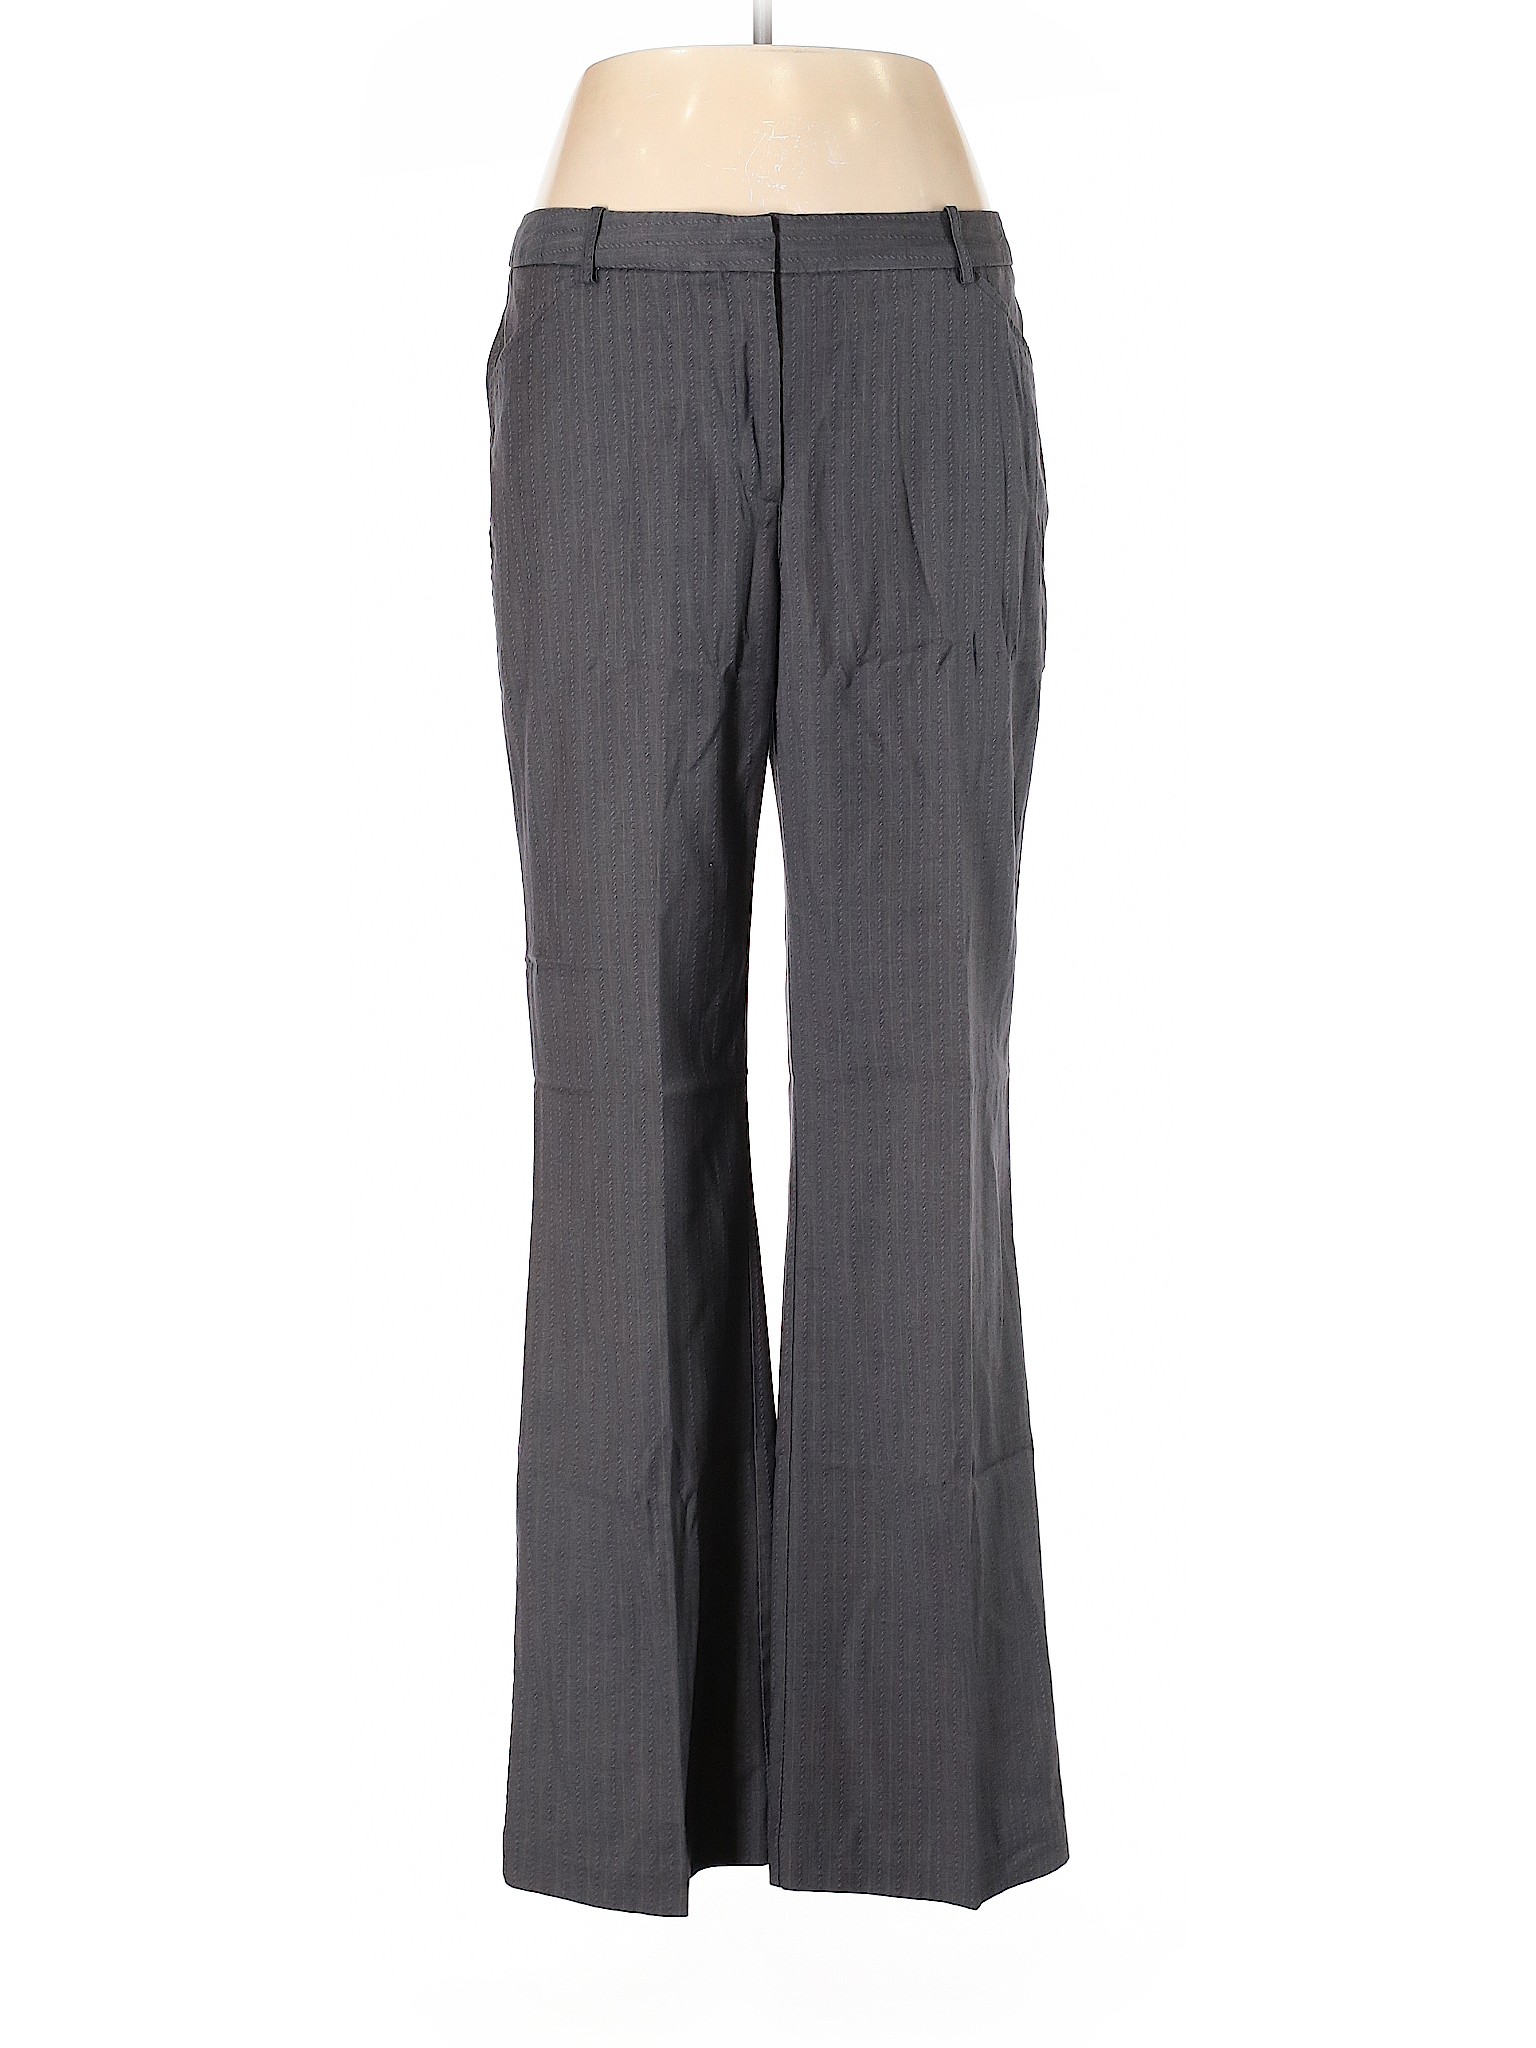 Worthington Women Gray Dress Pants 12 | eBay